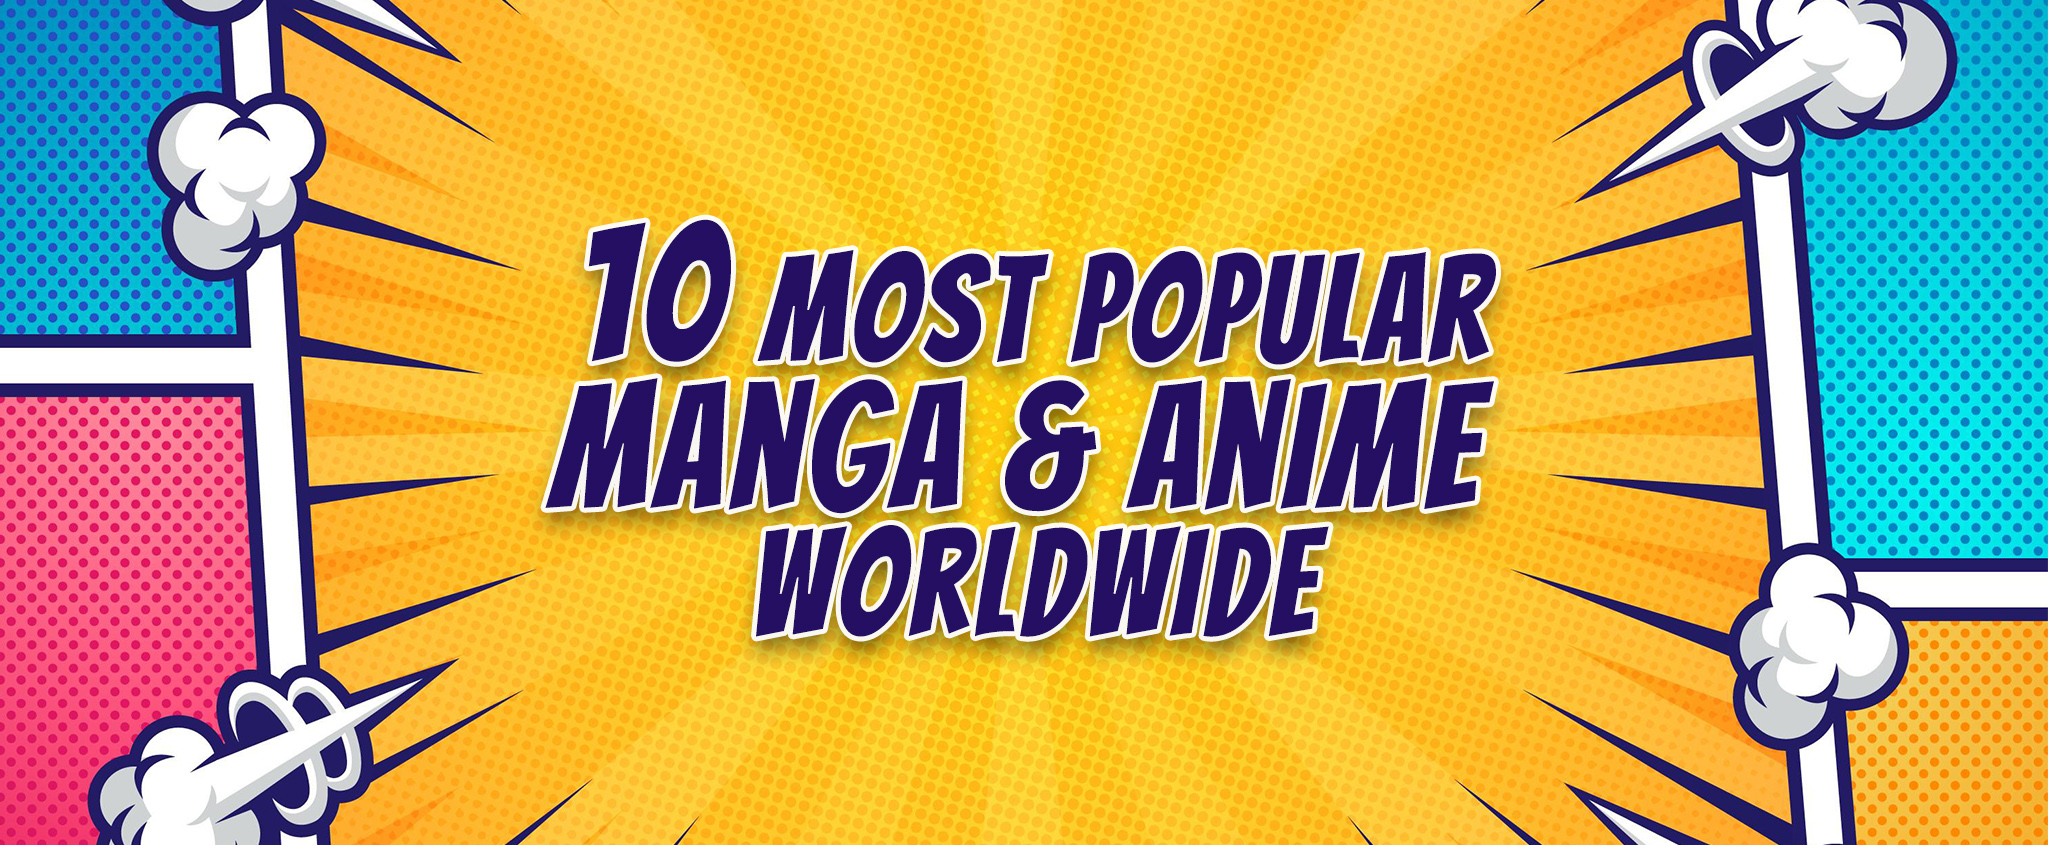 10 Most Popular manga and anime worldwide